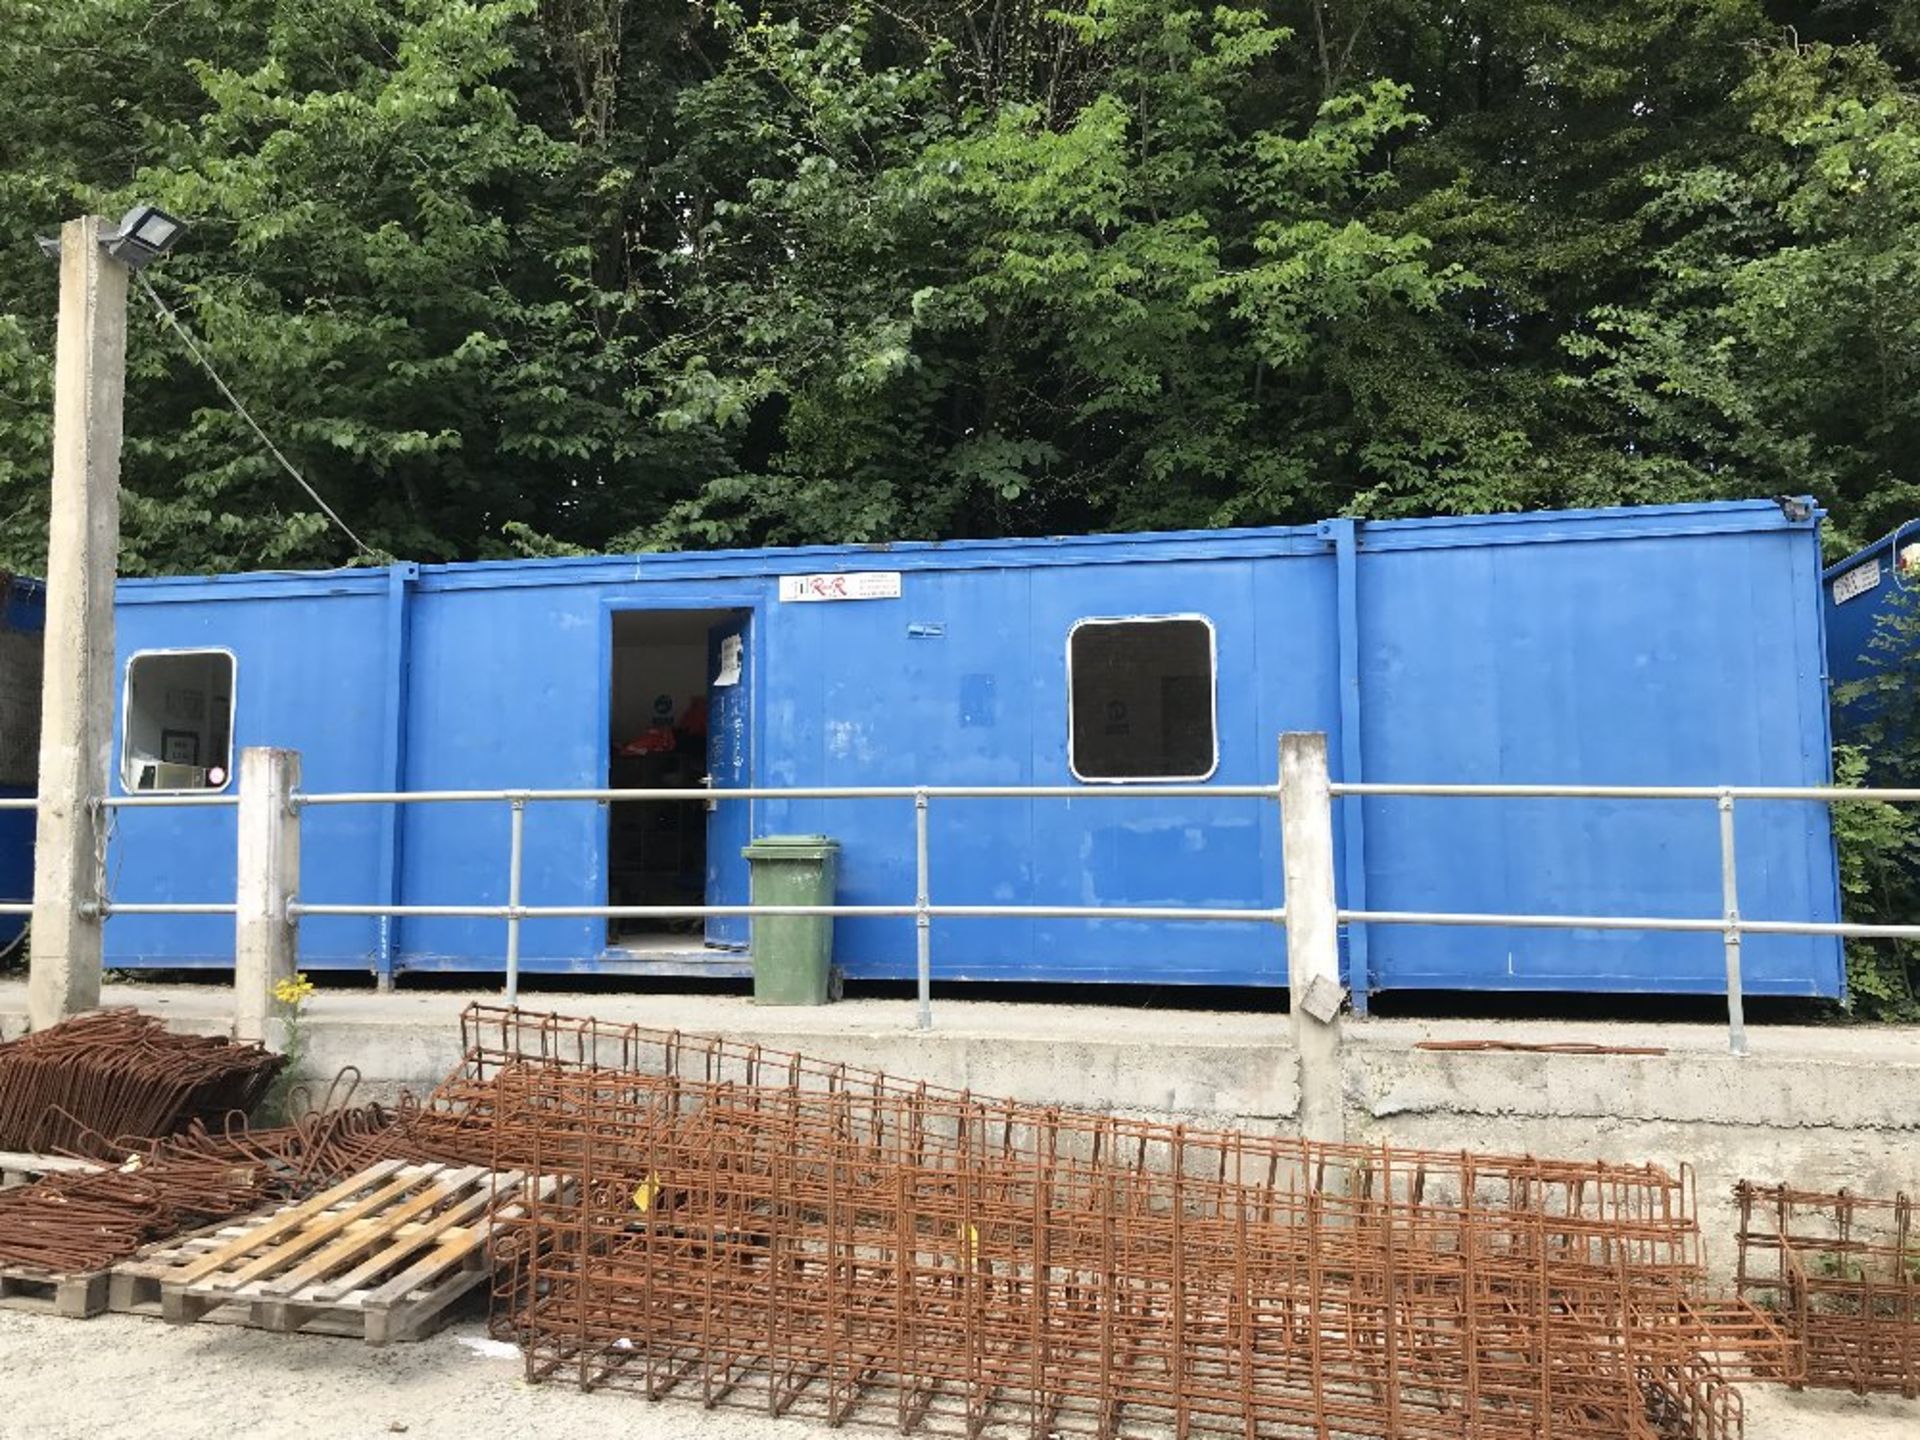 Portacabin jack legged staff toilet unit